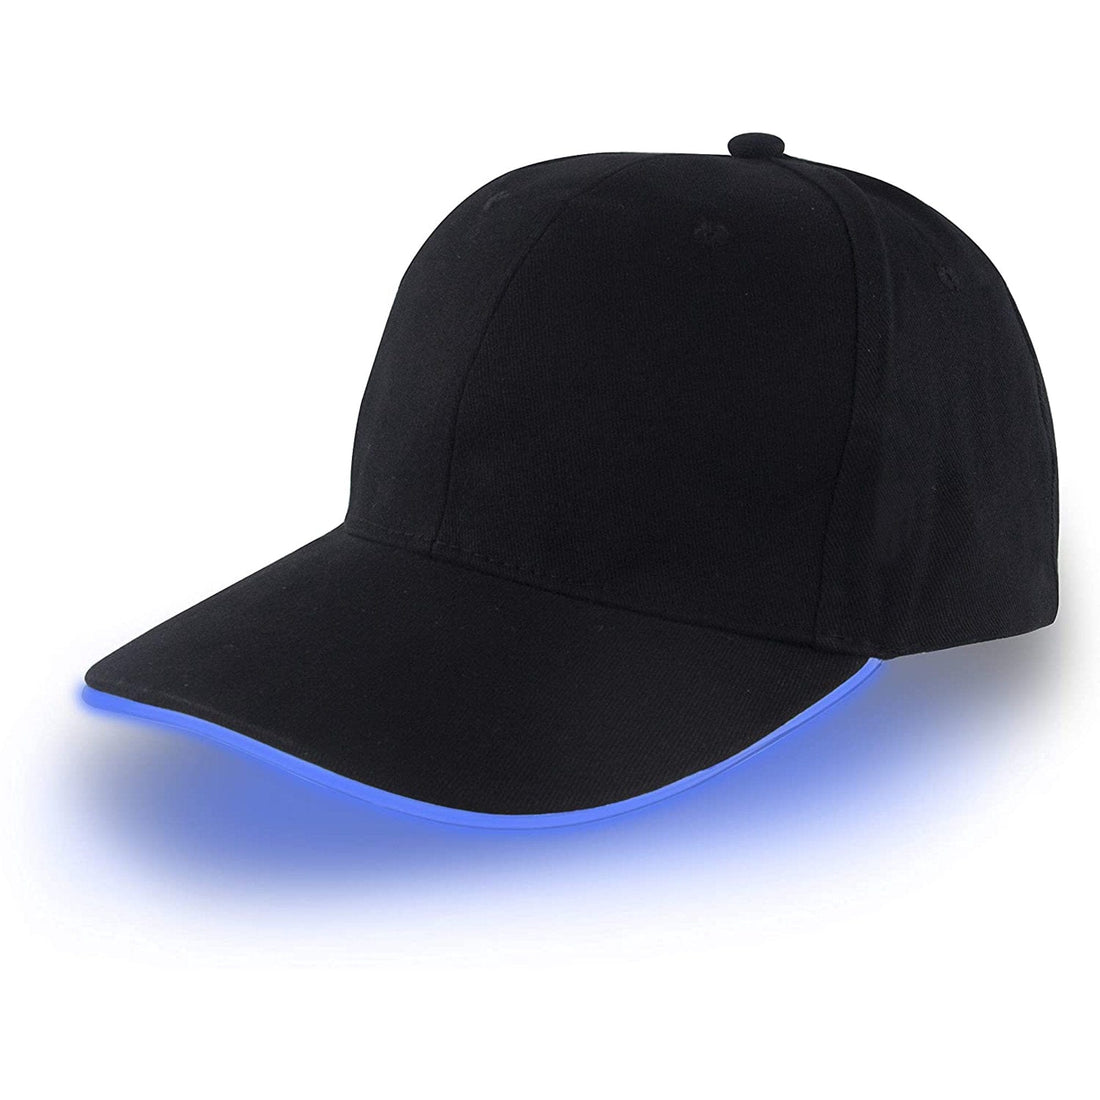 Rave-Essentials Co. LED Brim Glow Dad Hat